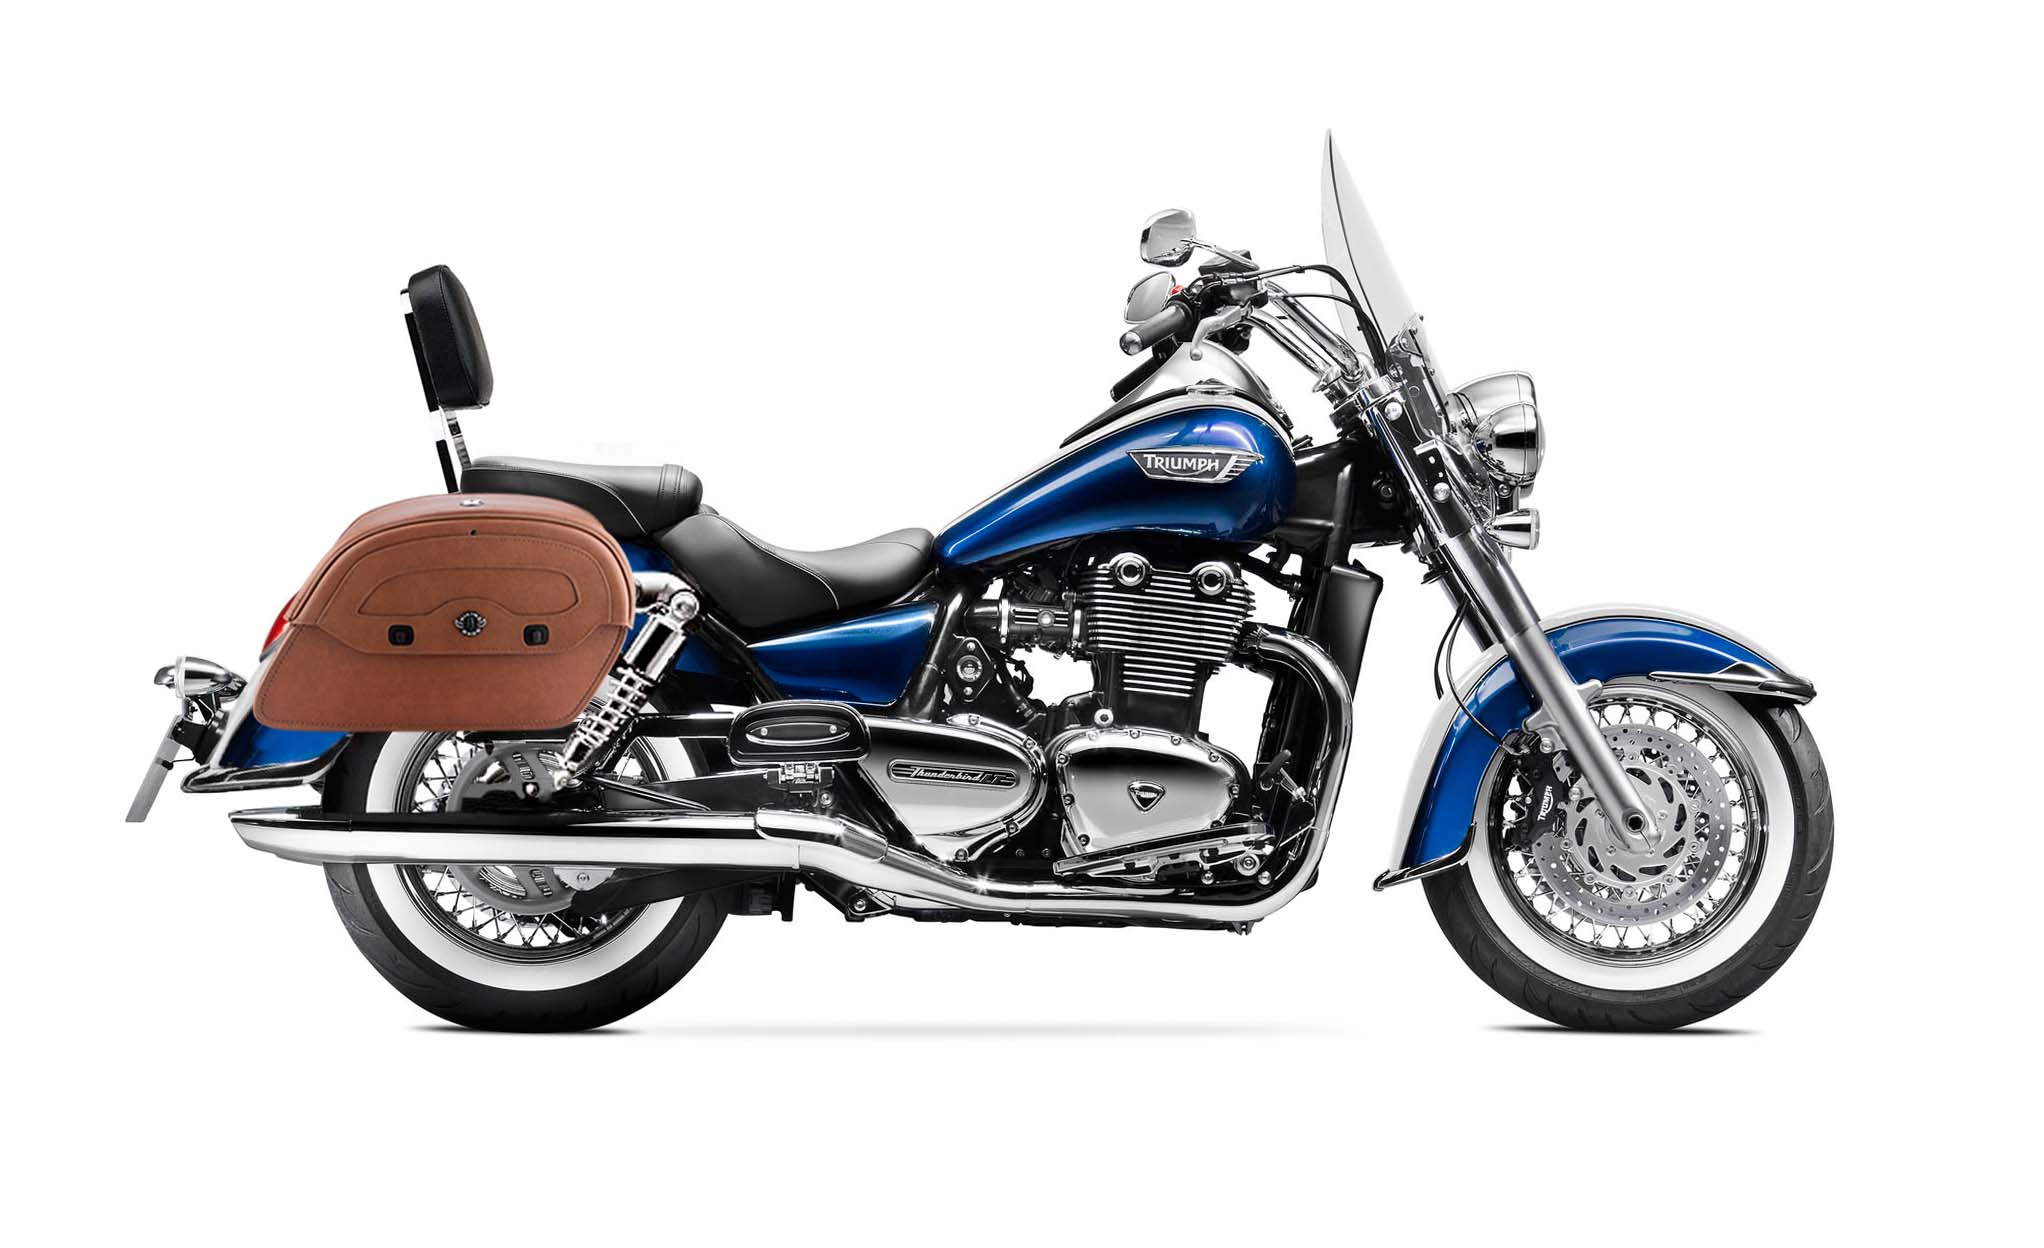 Viking Warrior Brown Large Triumph Thunderbird Lt Leather Motorcycle Saddlebags on Bike Photo @expand